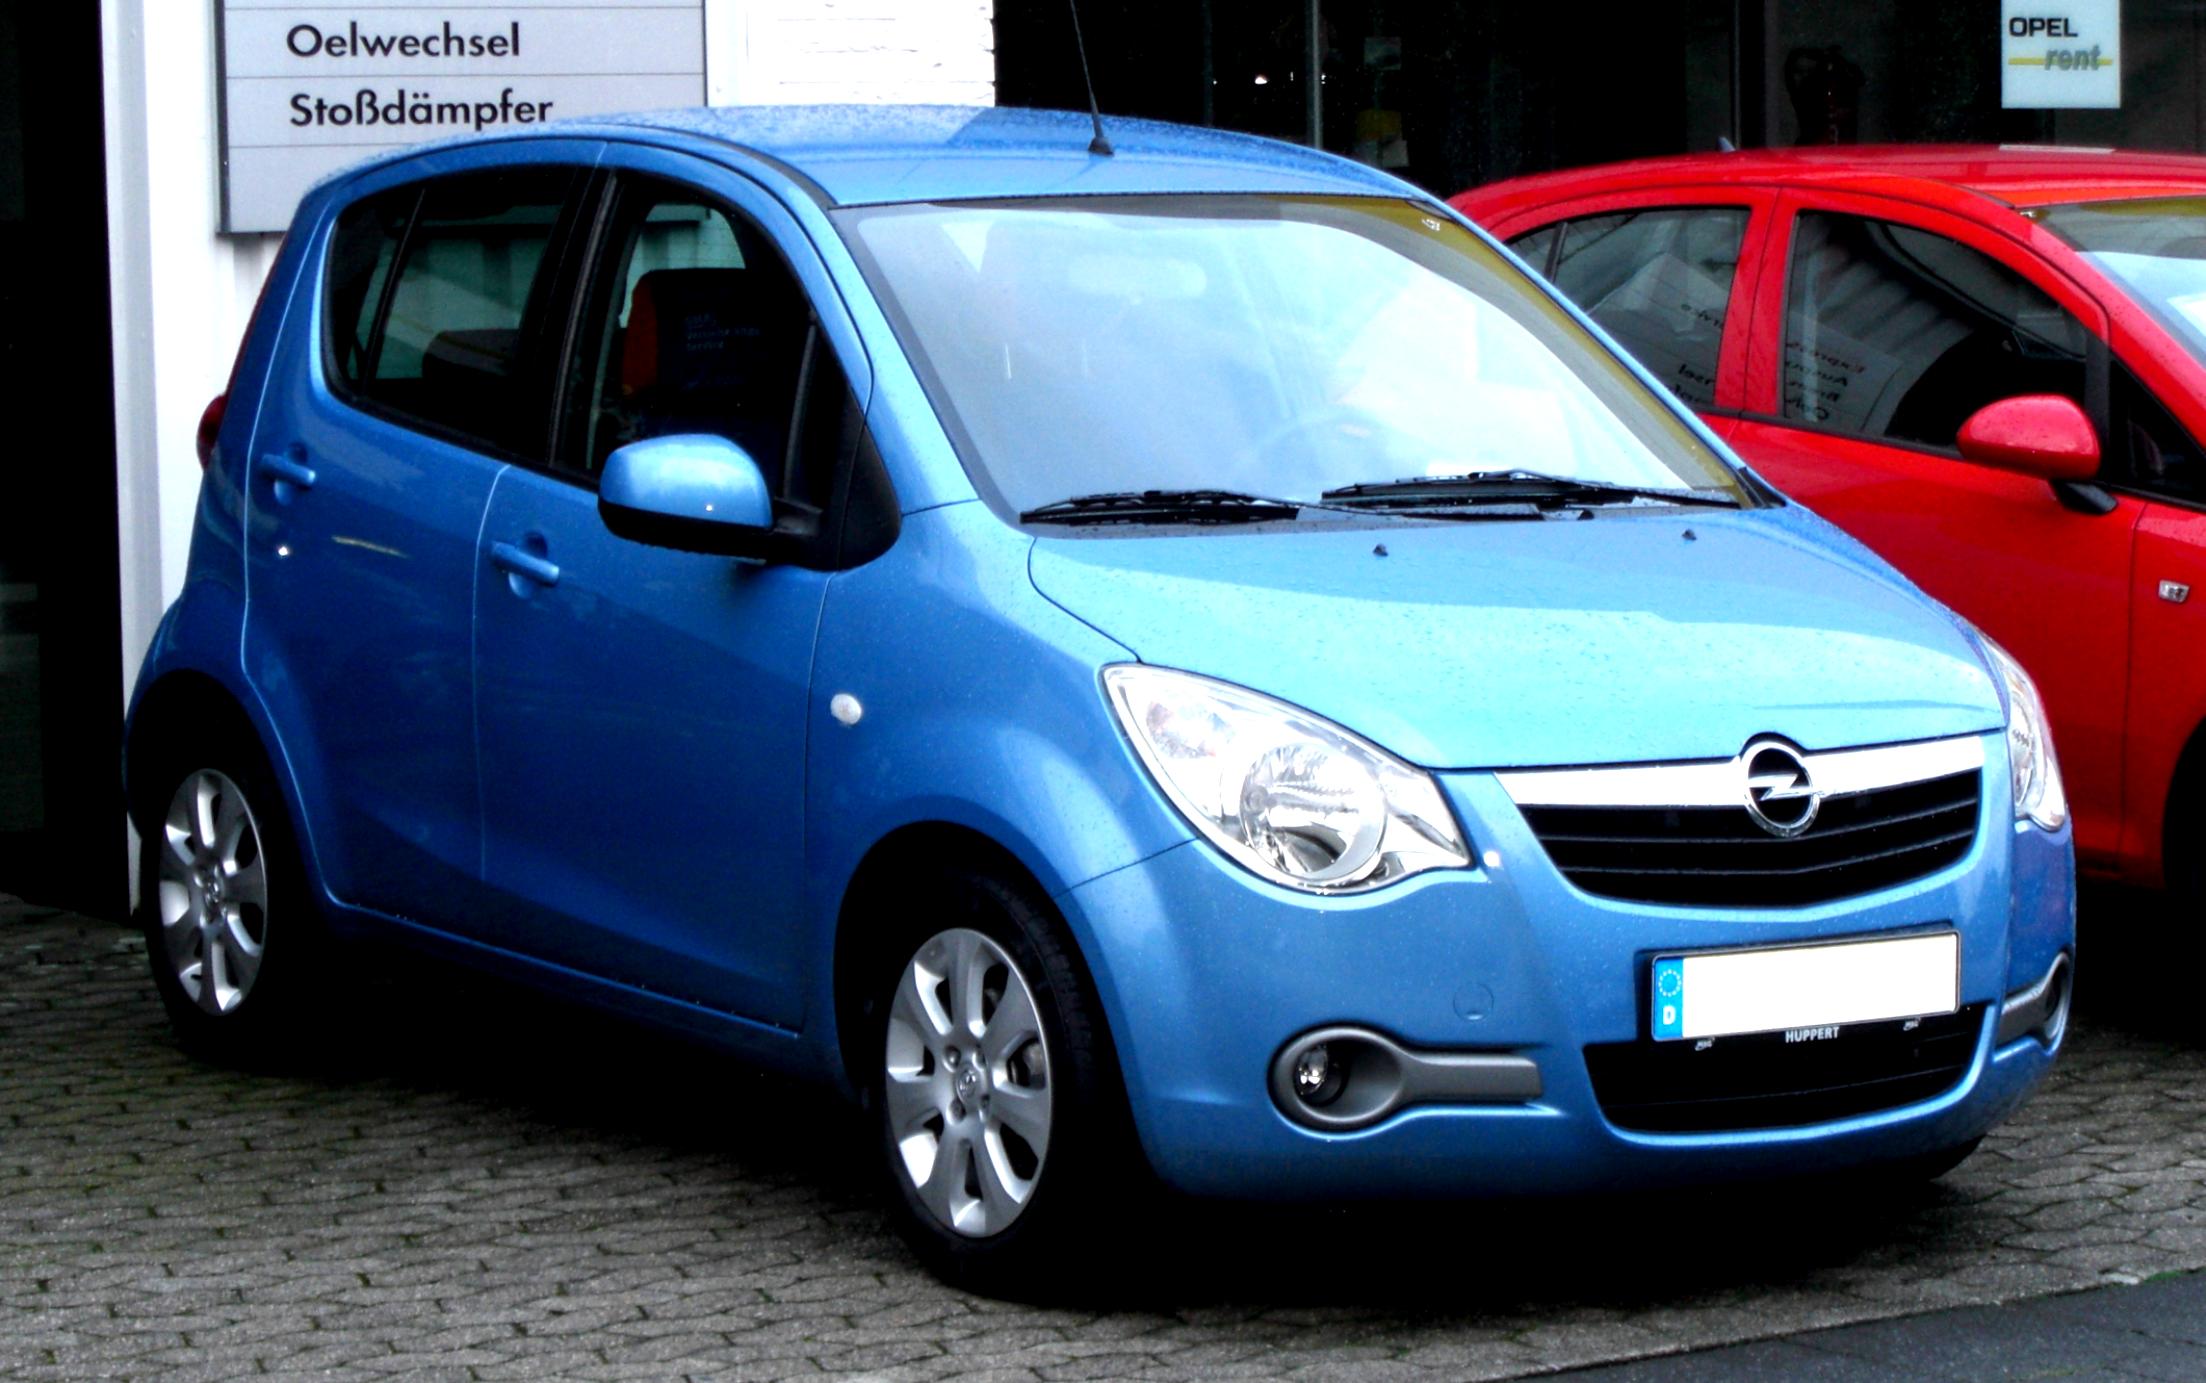 Opel Agila 2008 #81